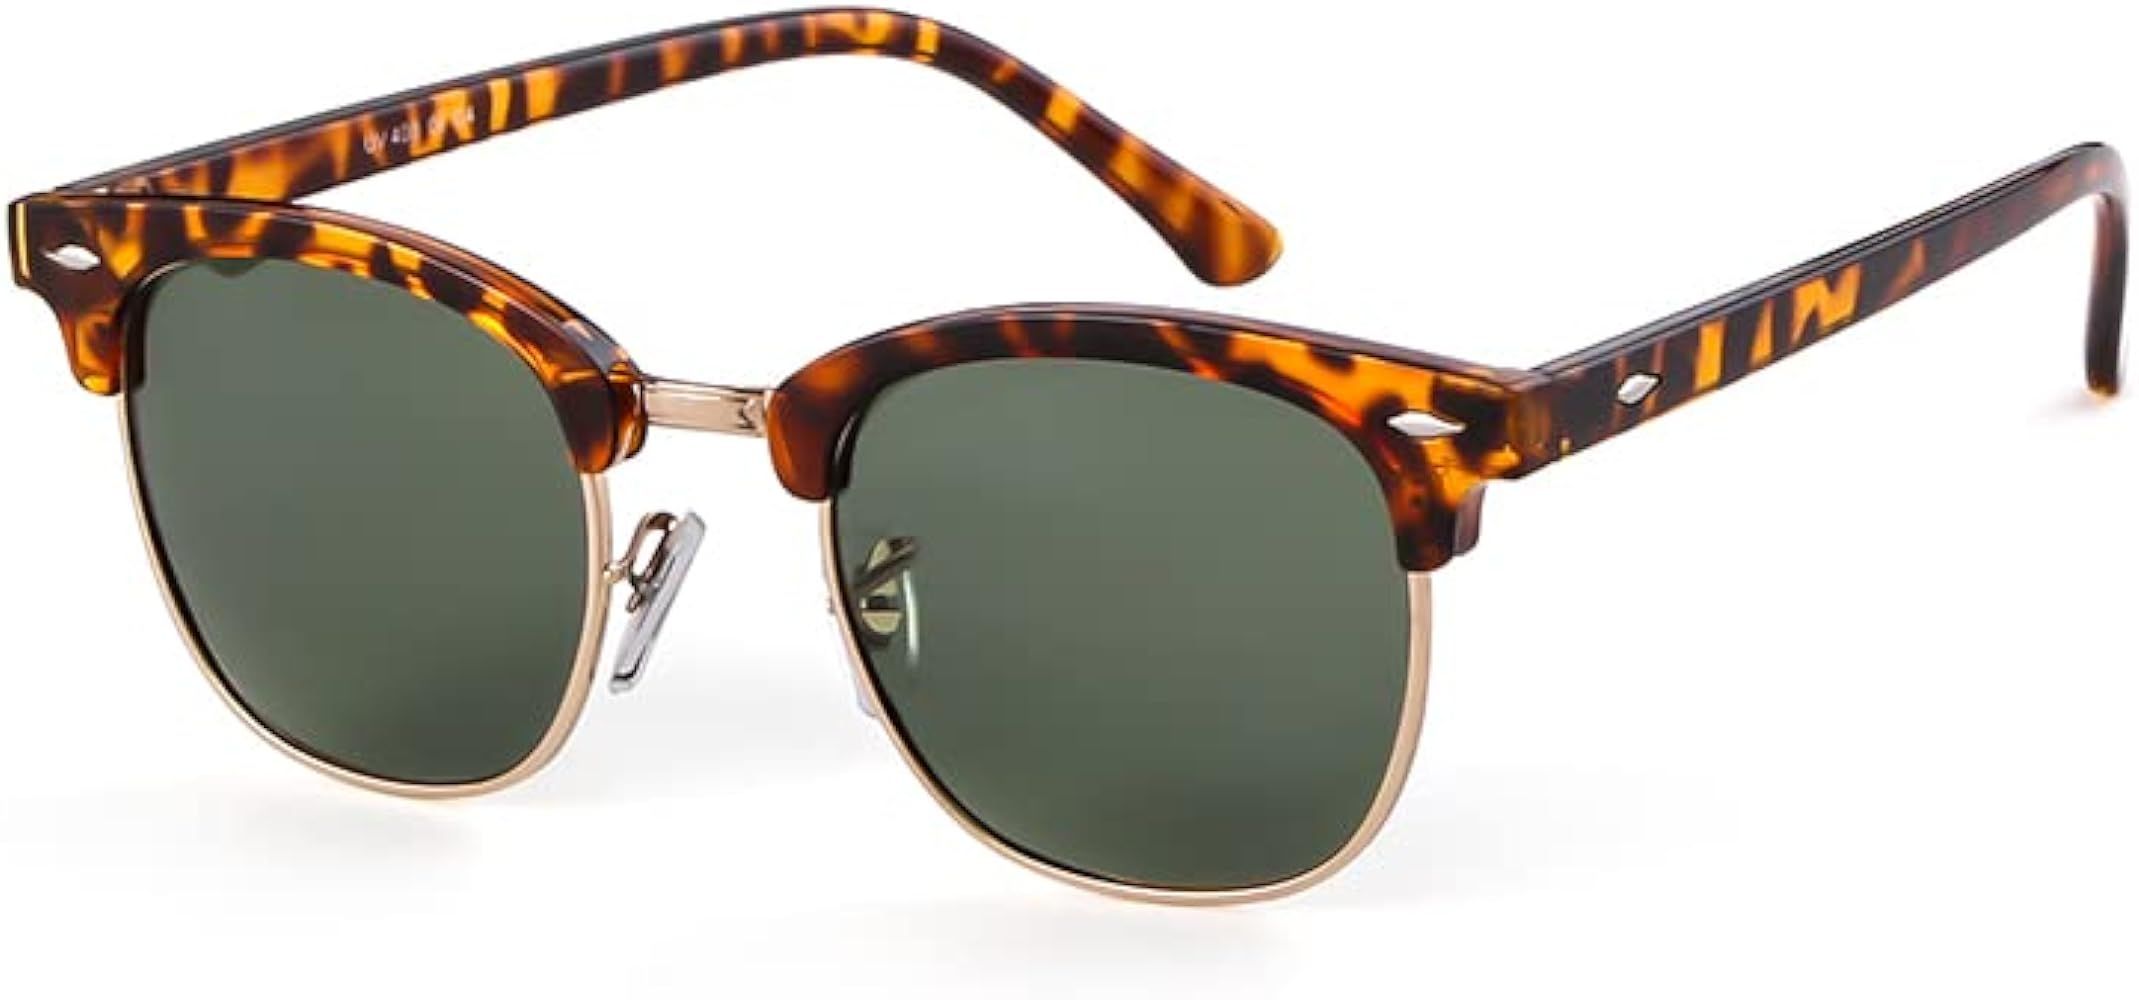 Polarized Sunglasses for Men and Women Semi-Rimless Frame Driving Sun glasses 100% UV Blocking | Amazon (US)